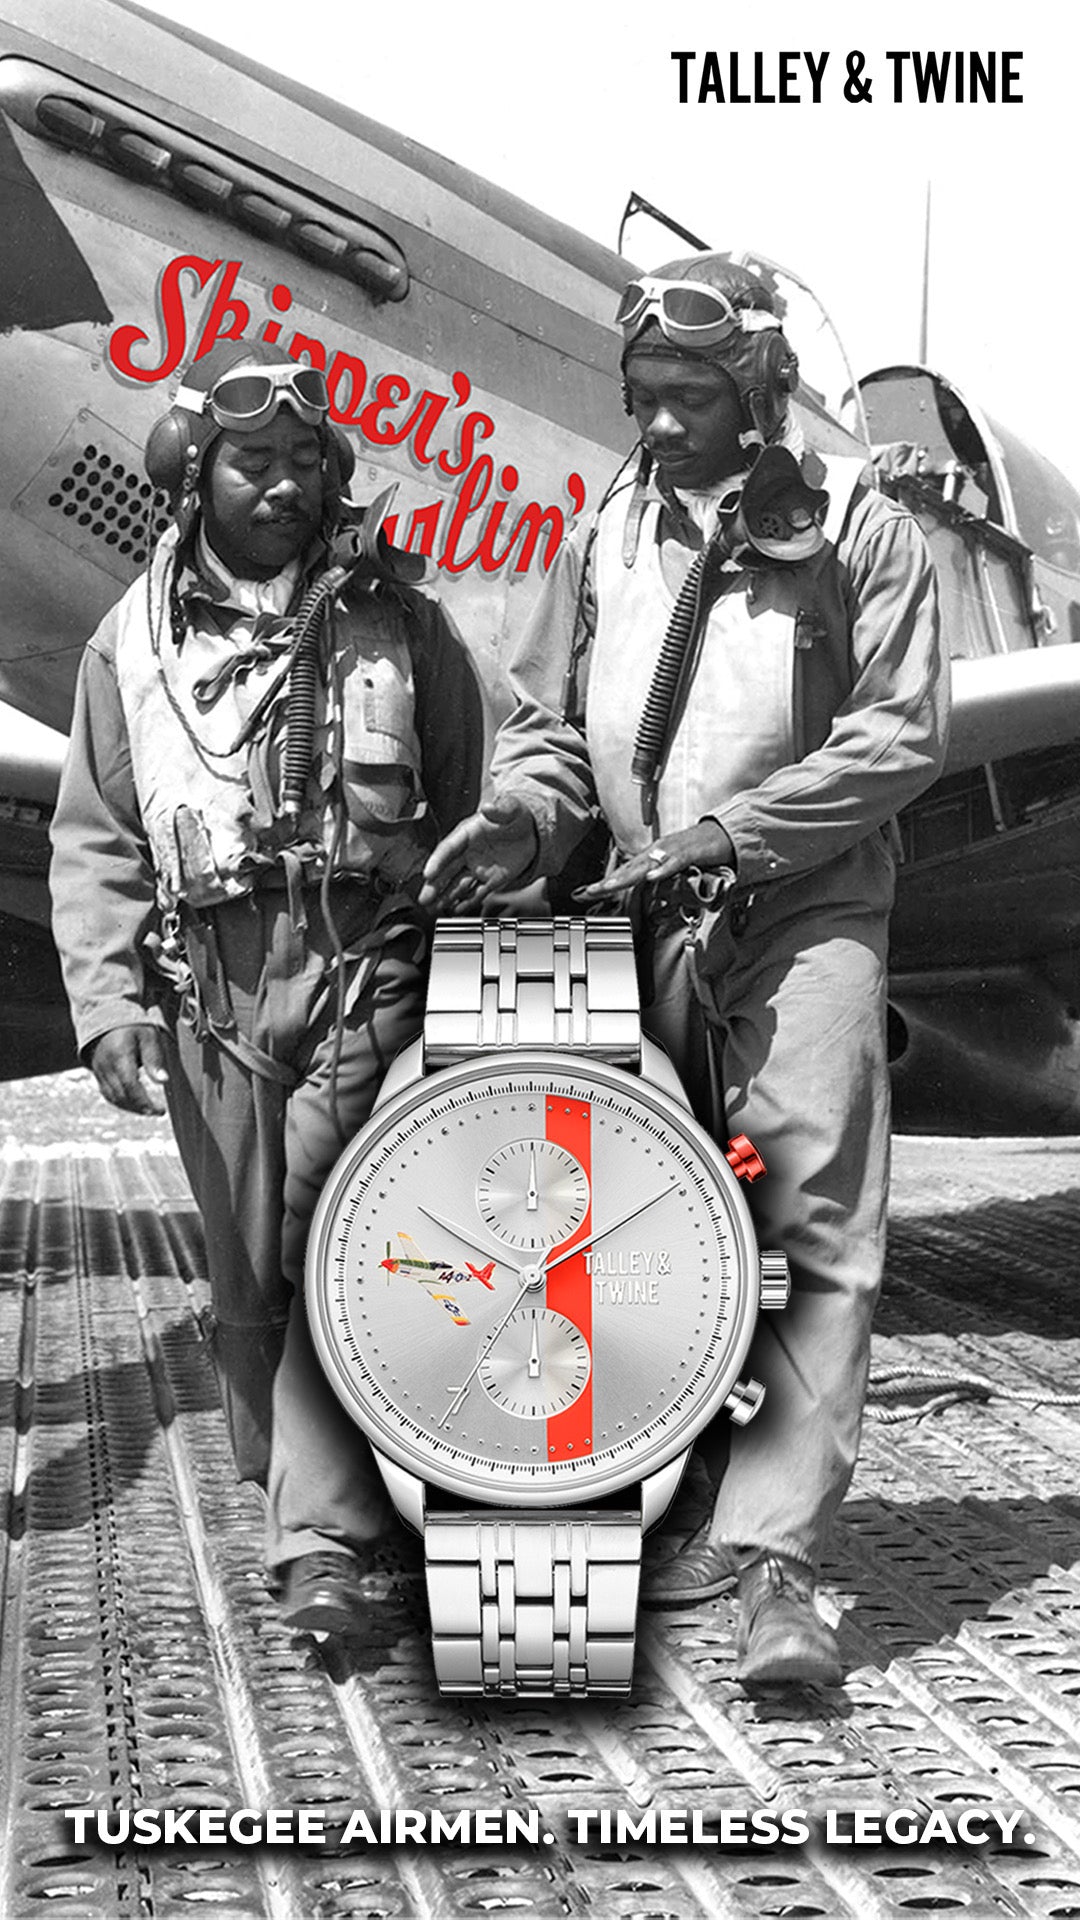 [PRE-ORDER: SHIPS BY 5/31] Tuskegee Airmen "Redtails V1"